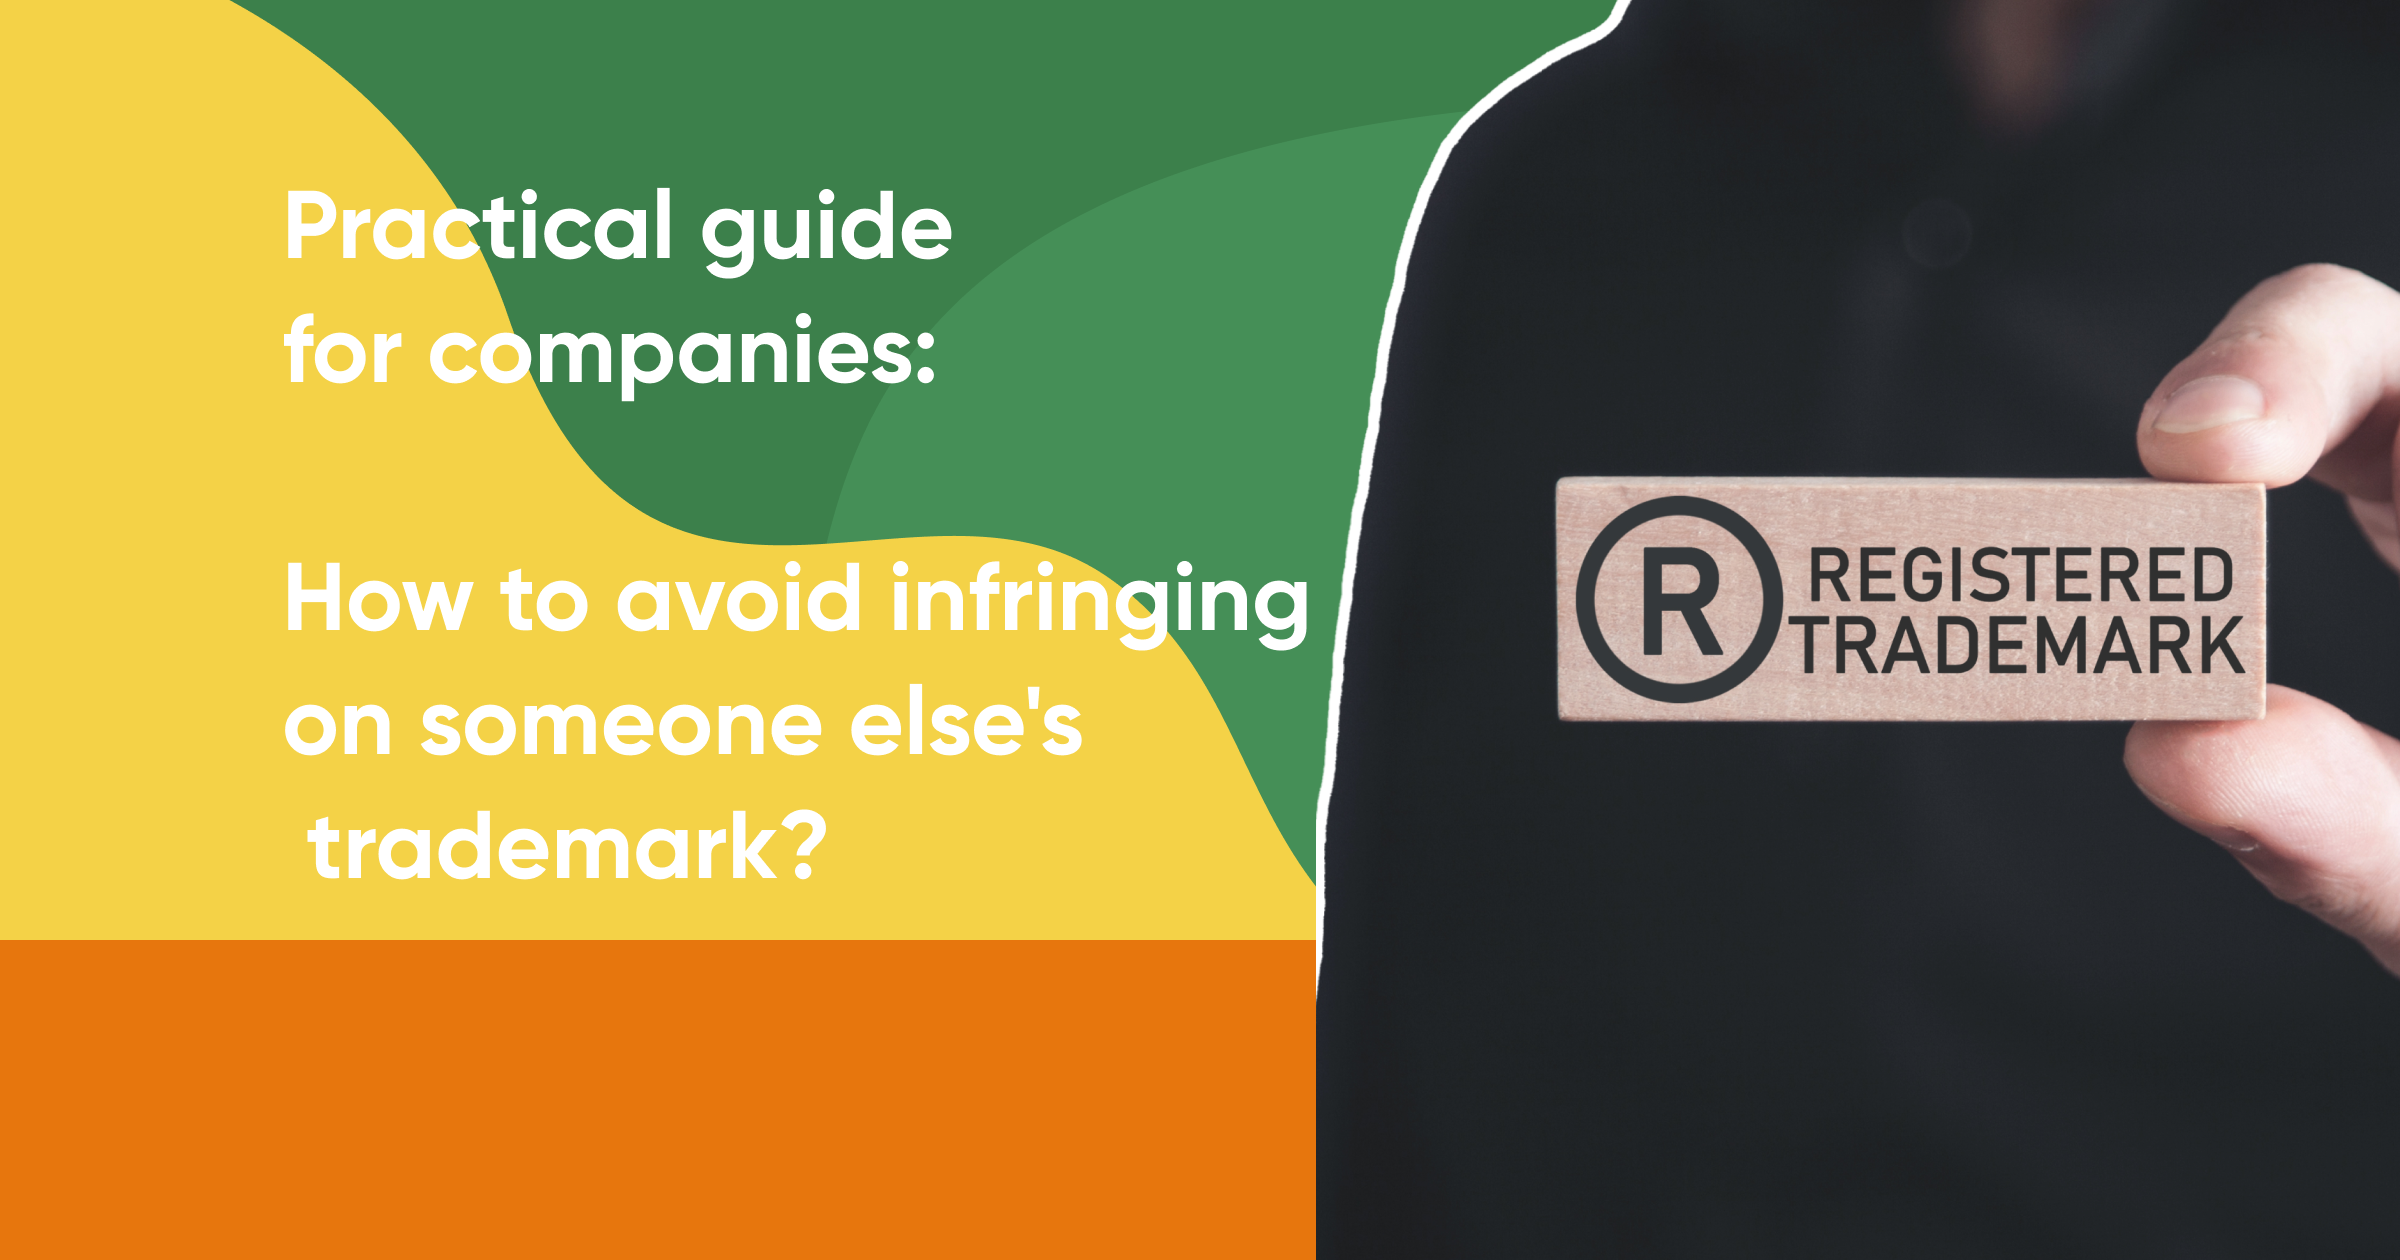  How to avoid infringing on someone else's trademark?
